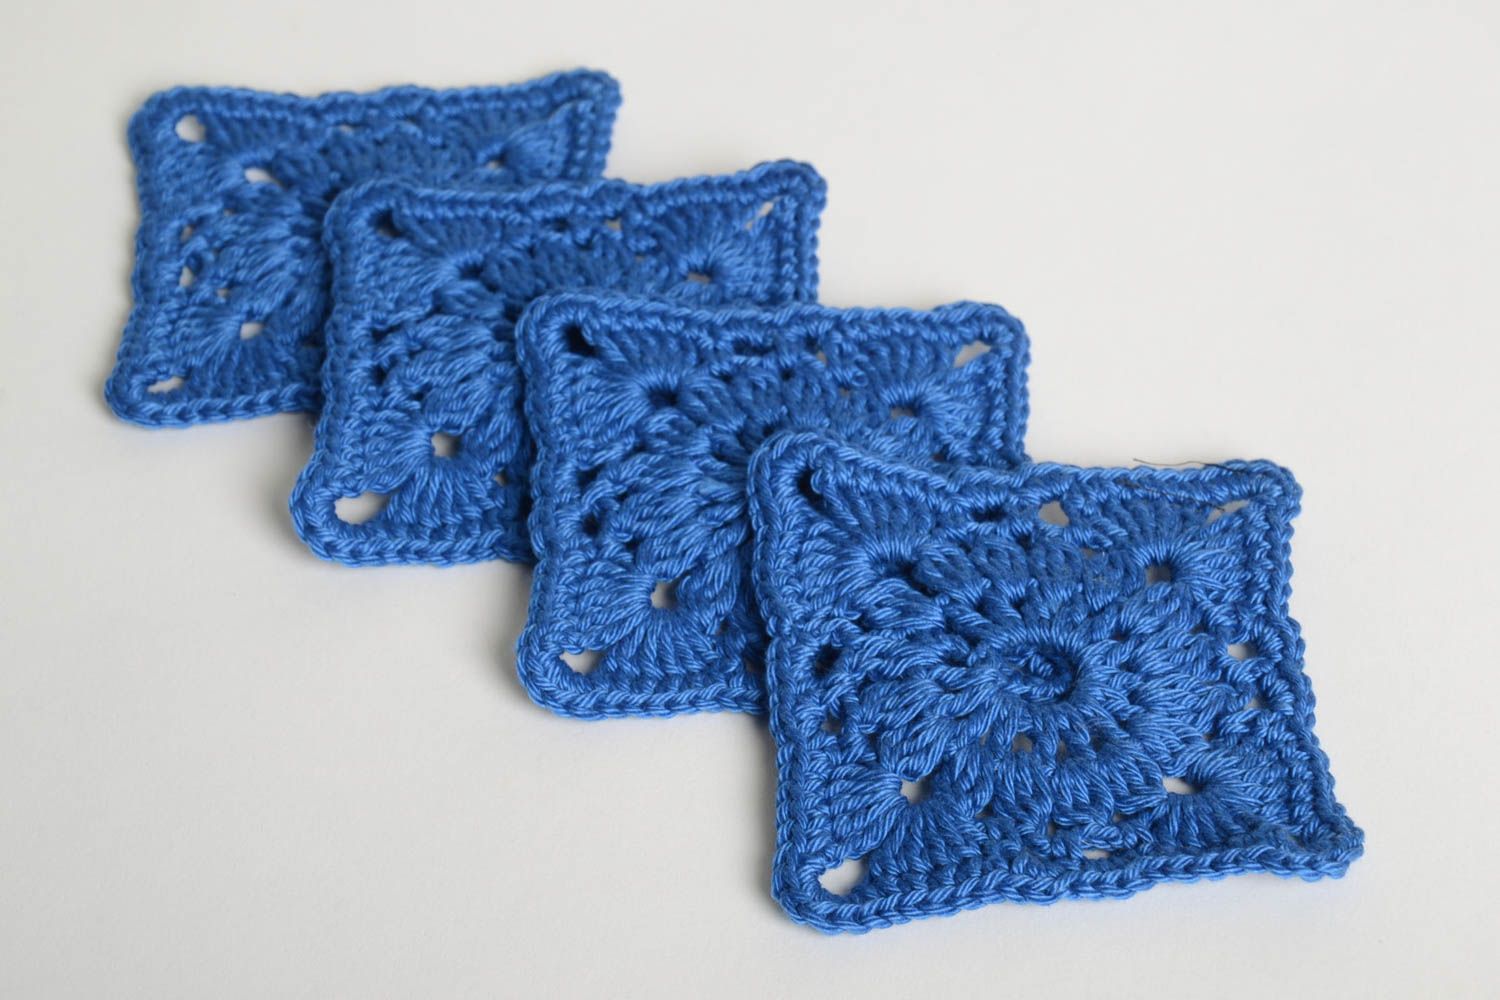 Cute handmade hot pads 4 pieces crochet coaster home textiles kitchen supplies photo 5